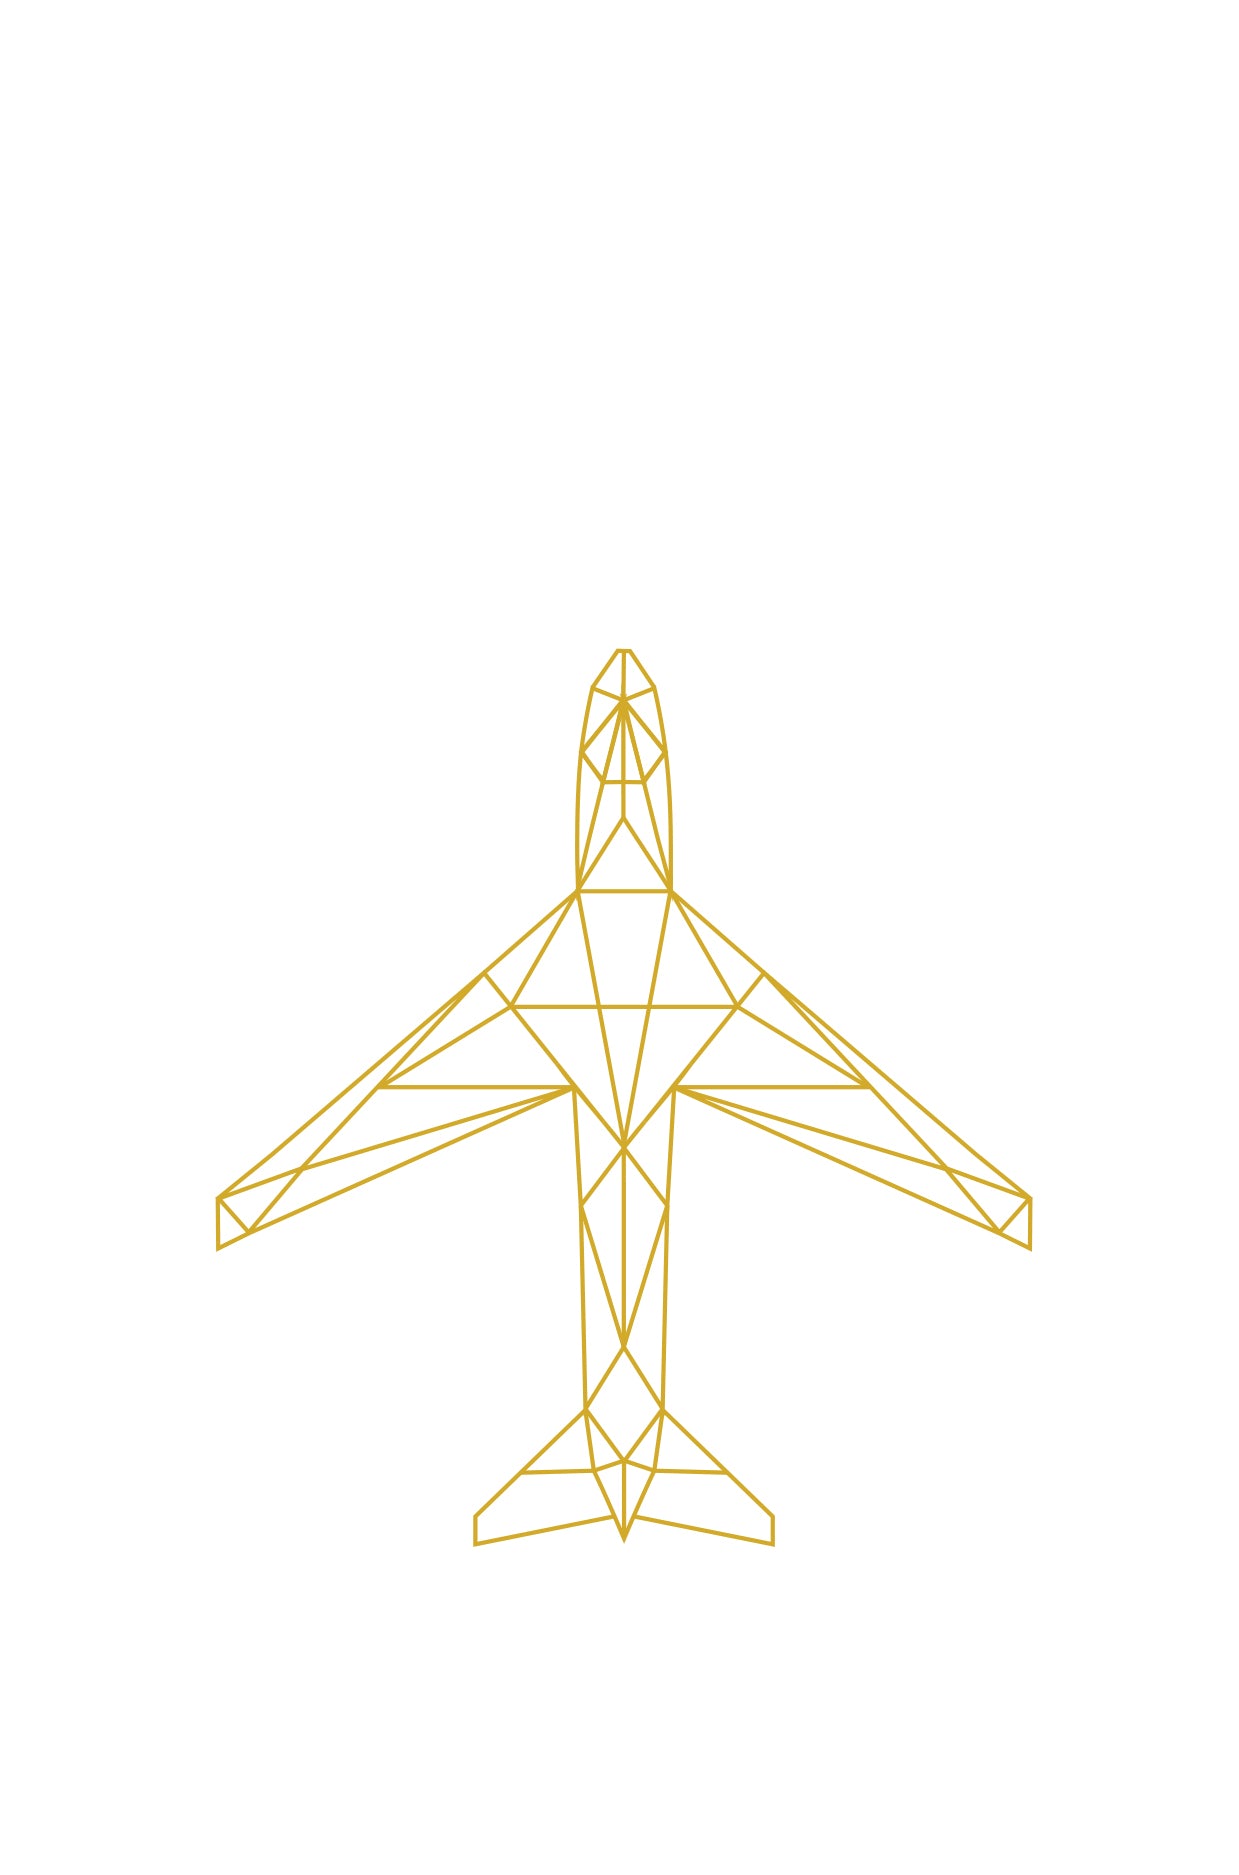 A geometric illustration of an aircraft.